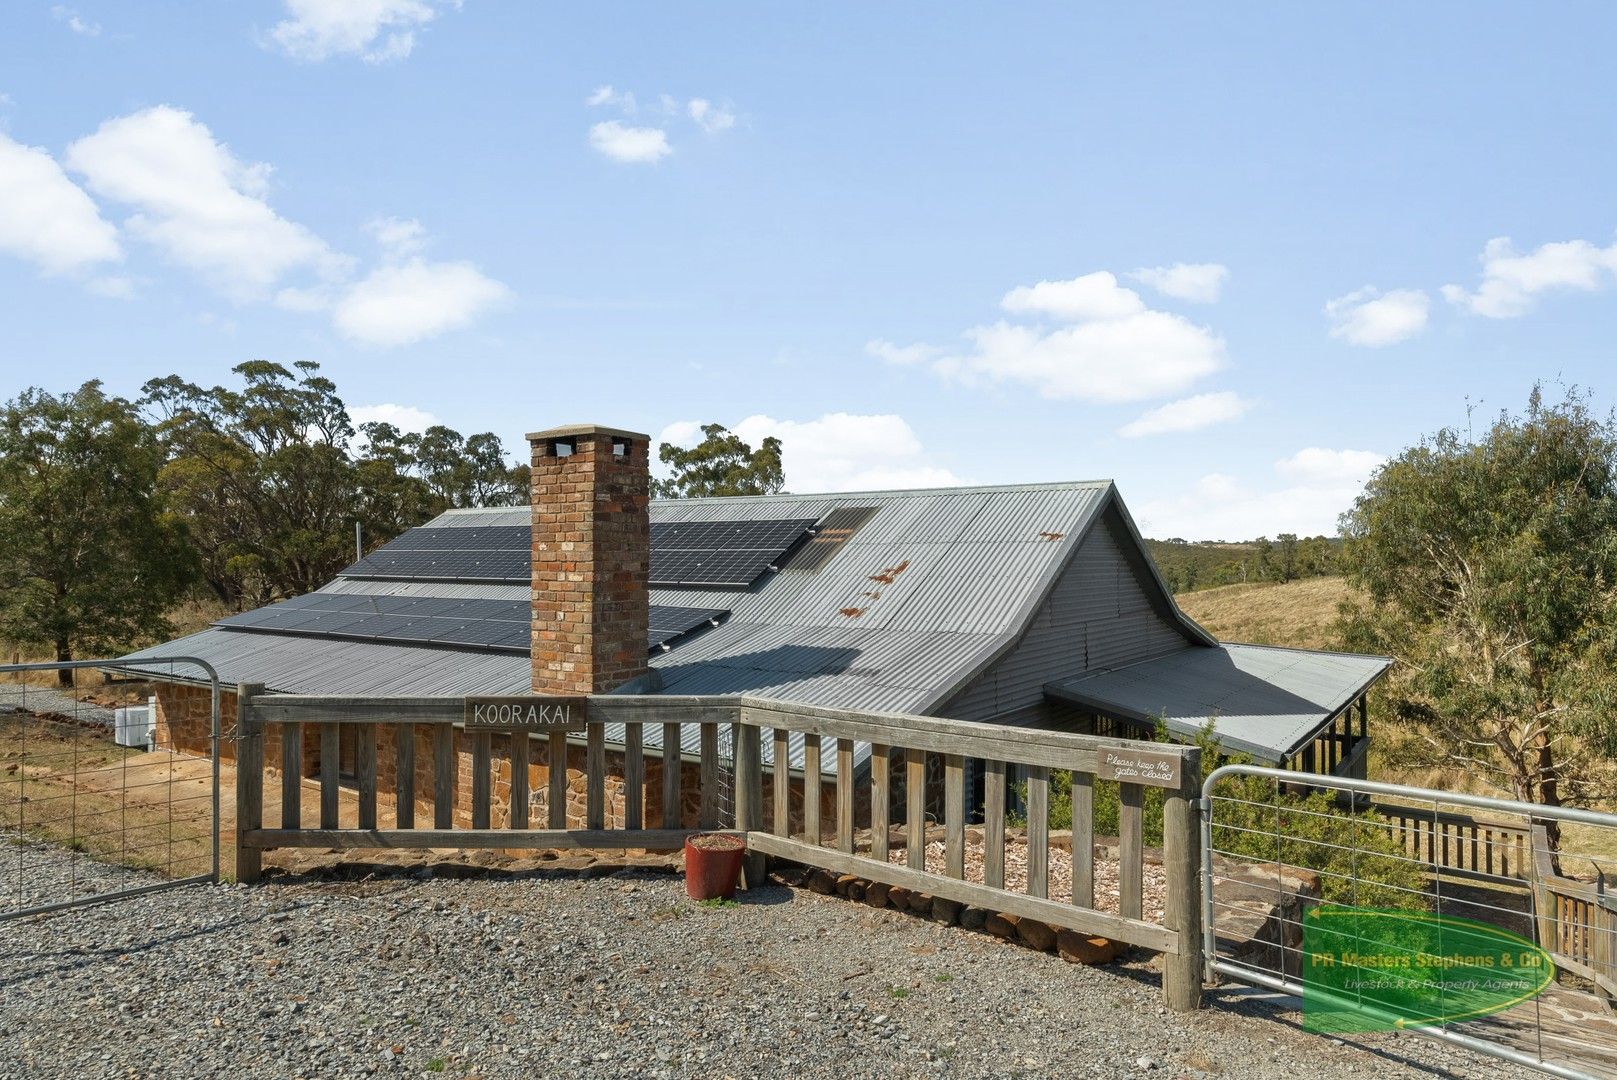 3 bedrooms Rural in 6861 Taralga Road TARALGA NSW, 2580